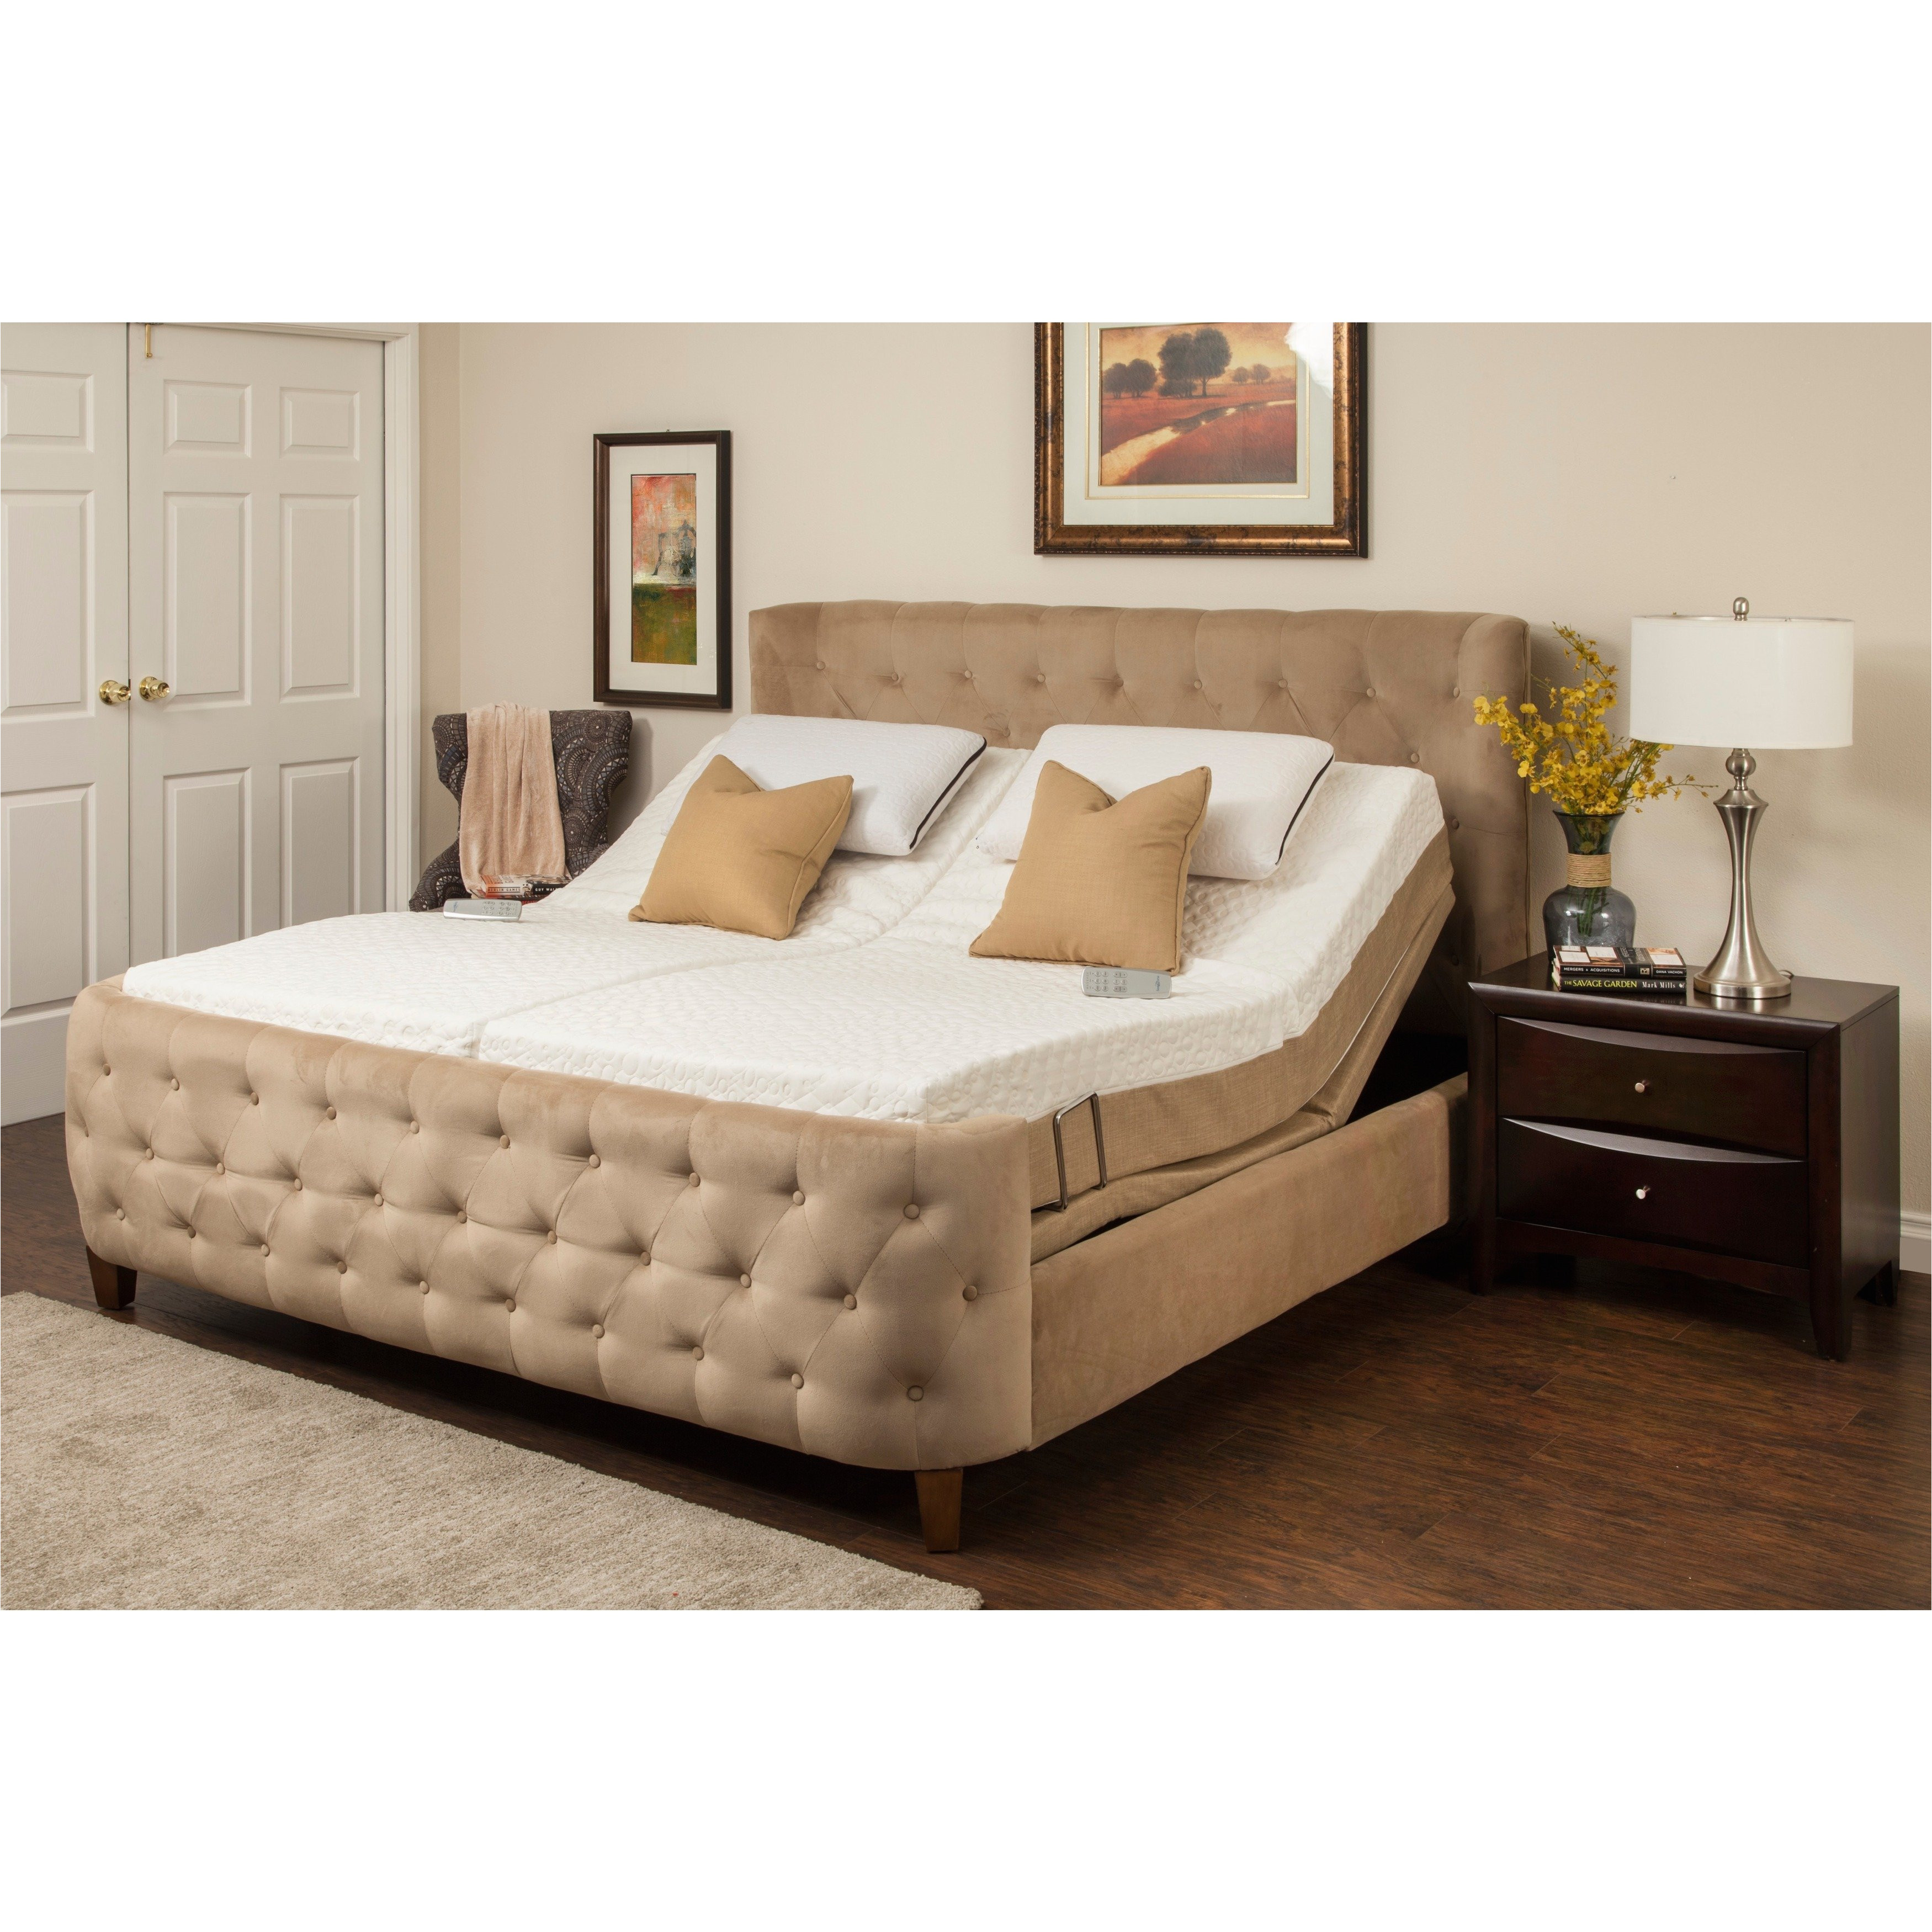 shop sleep zone malibu 12 inch split california king size memory foam and latex adjustable mattress set free shipping today overstock com 10951389